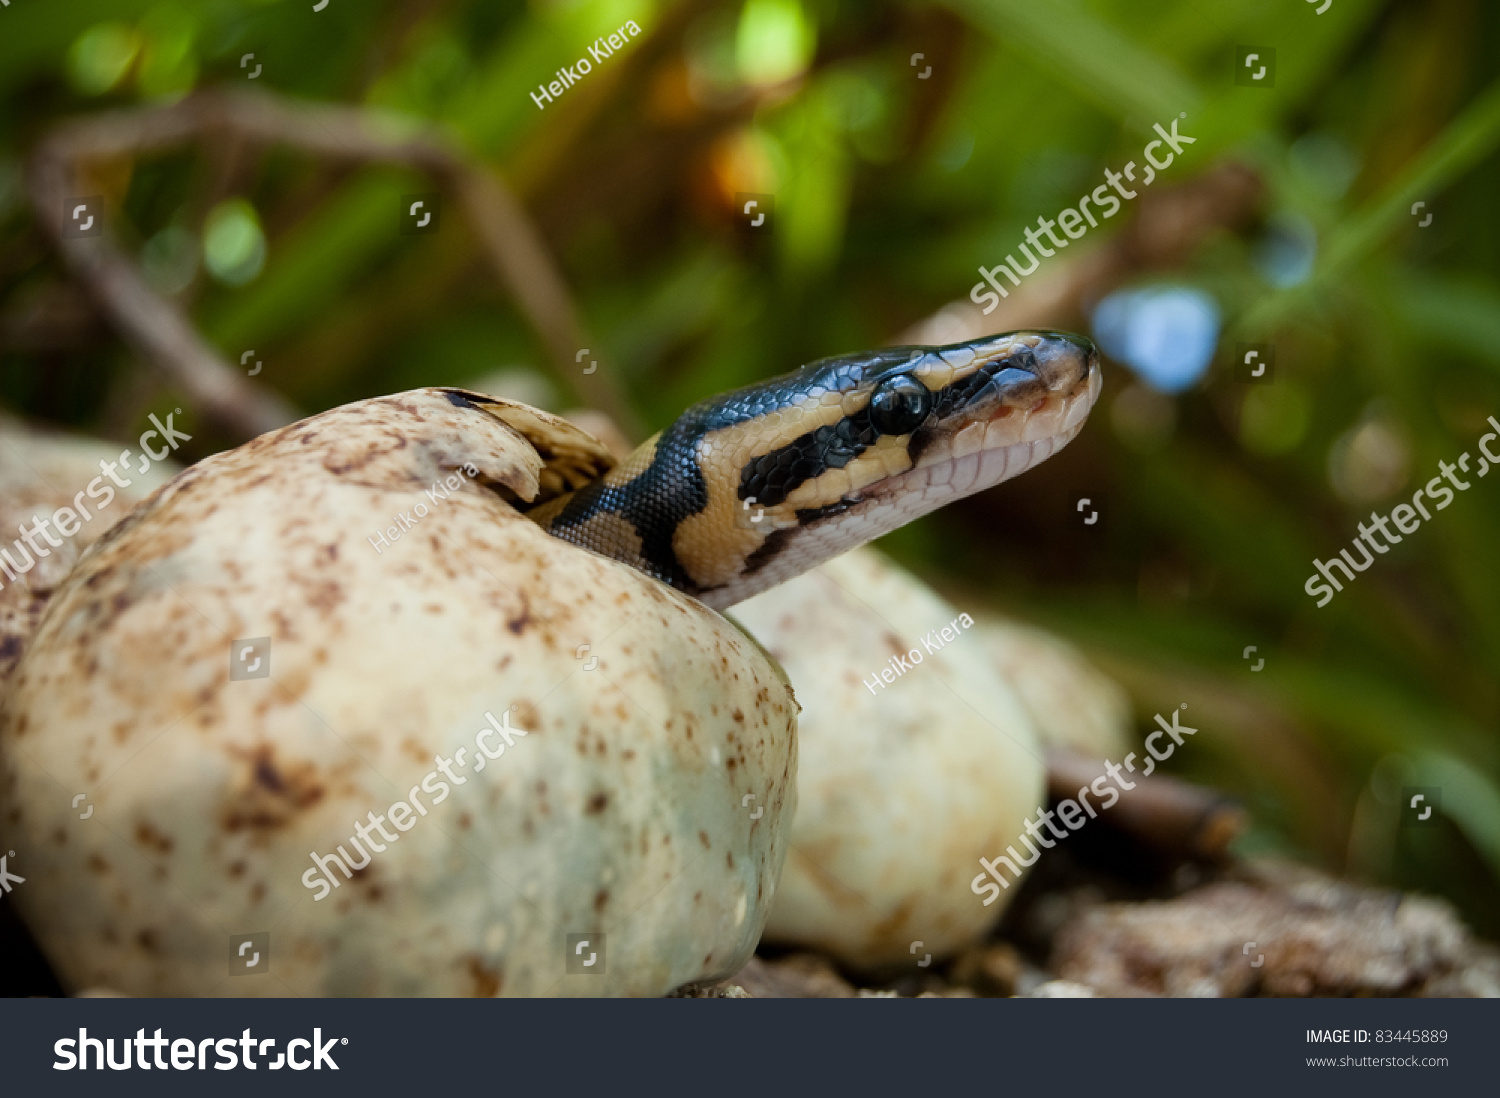 Pythons Hatching Everglades Stock Photo 83445889 - Shutterstock